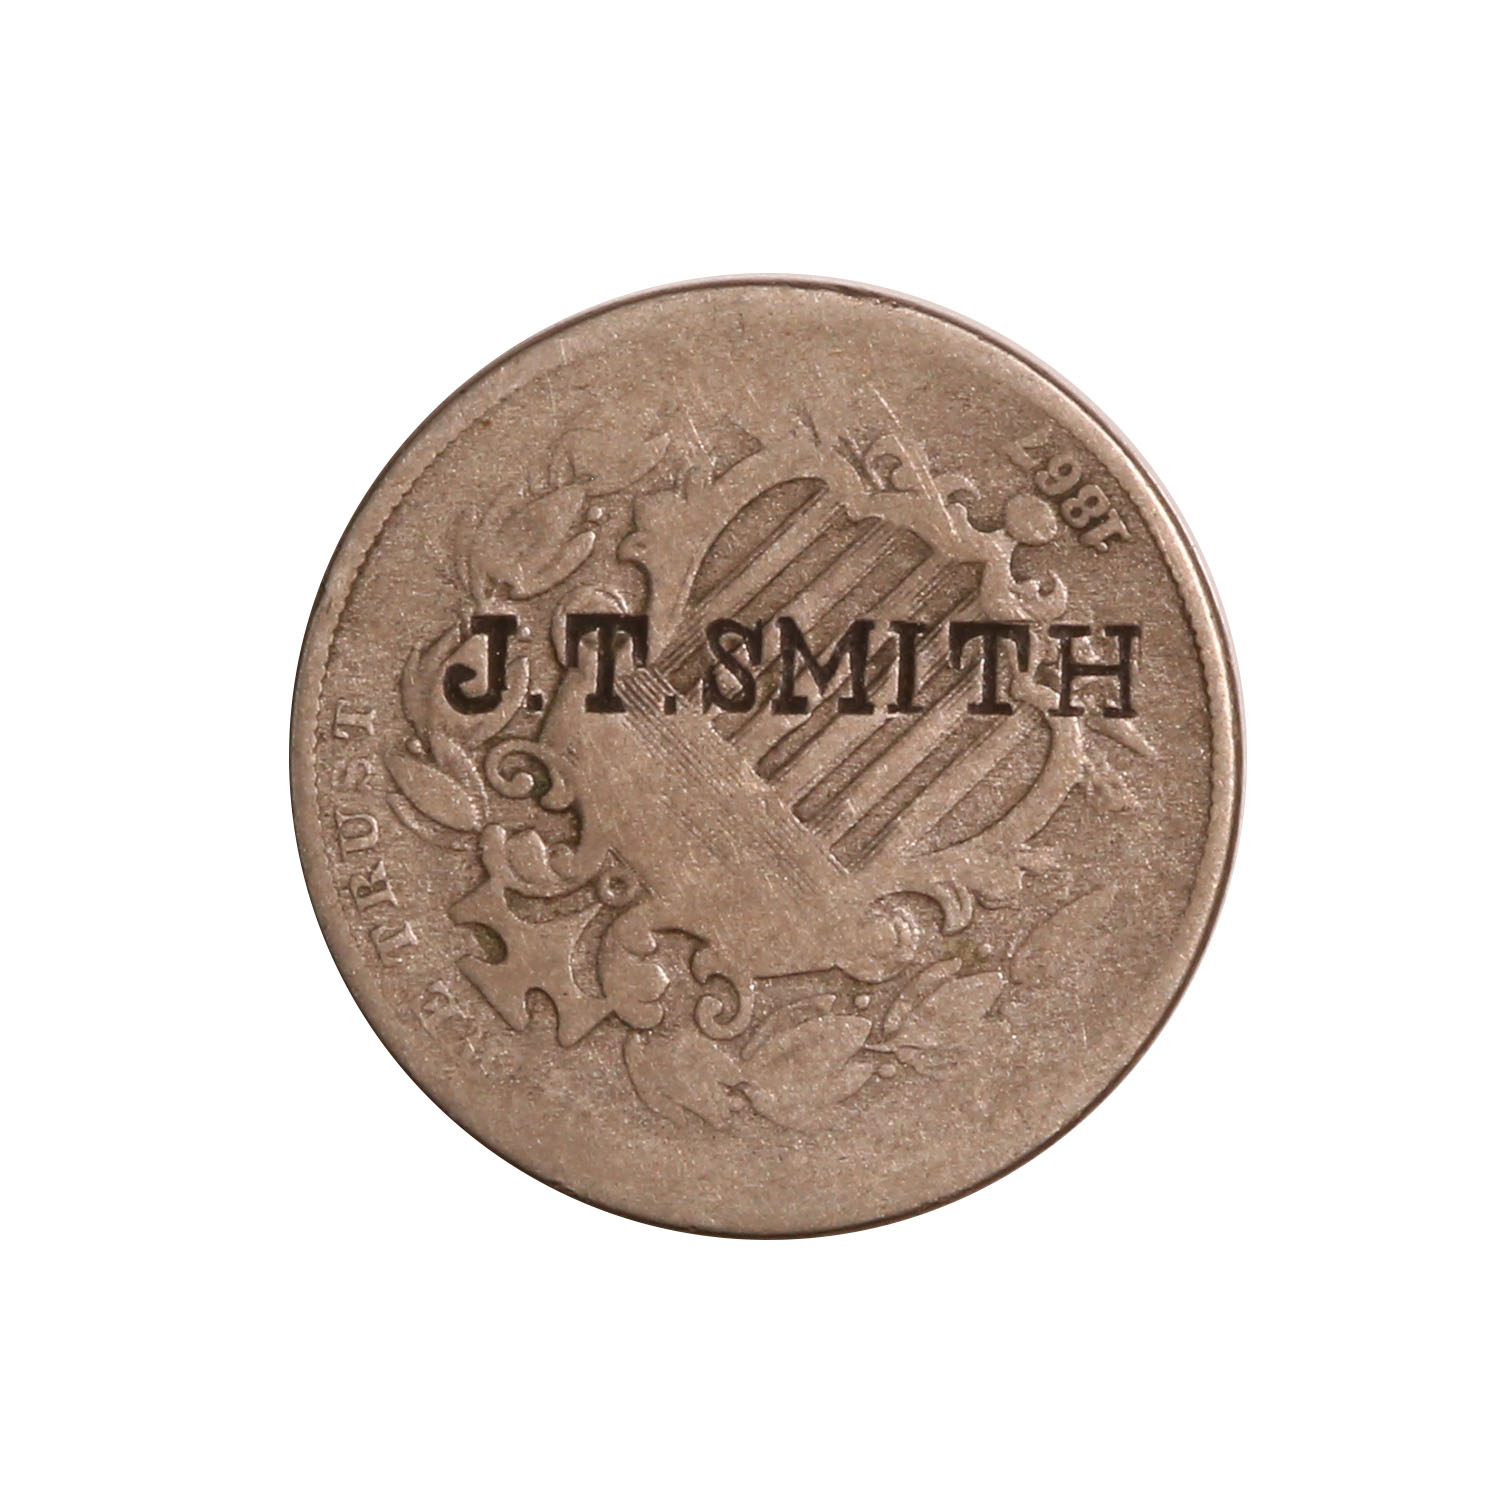 U.S. Merchant Token Shield Nickel 1867 "J.T. SMITH" Counterstamp NI-Sc3